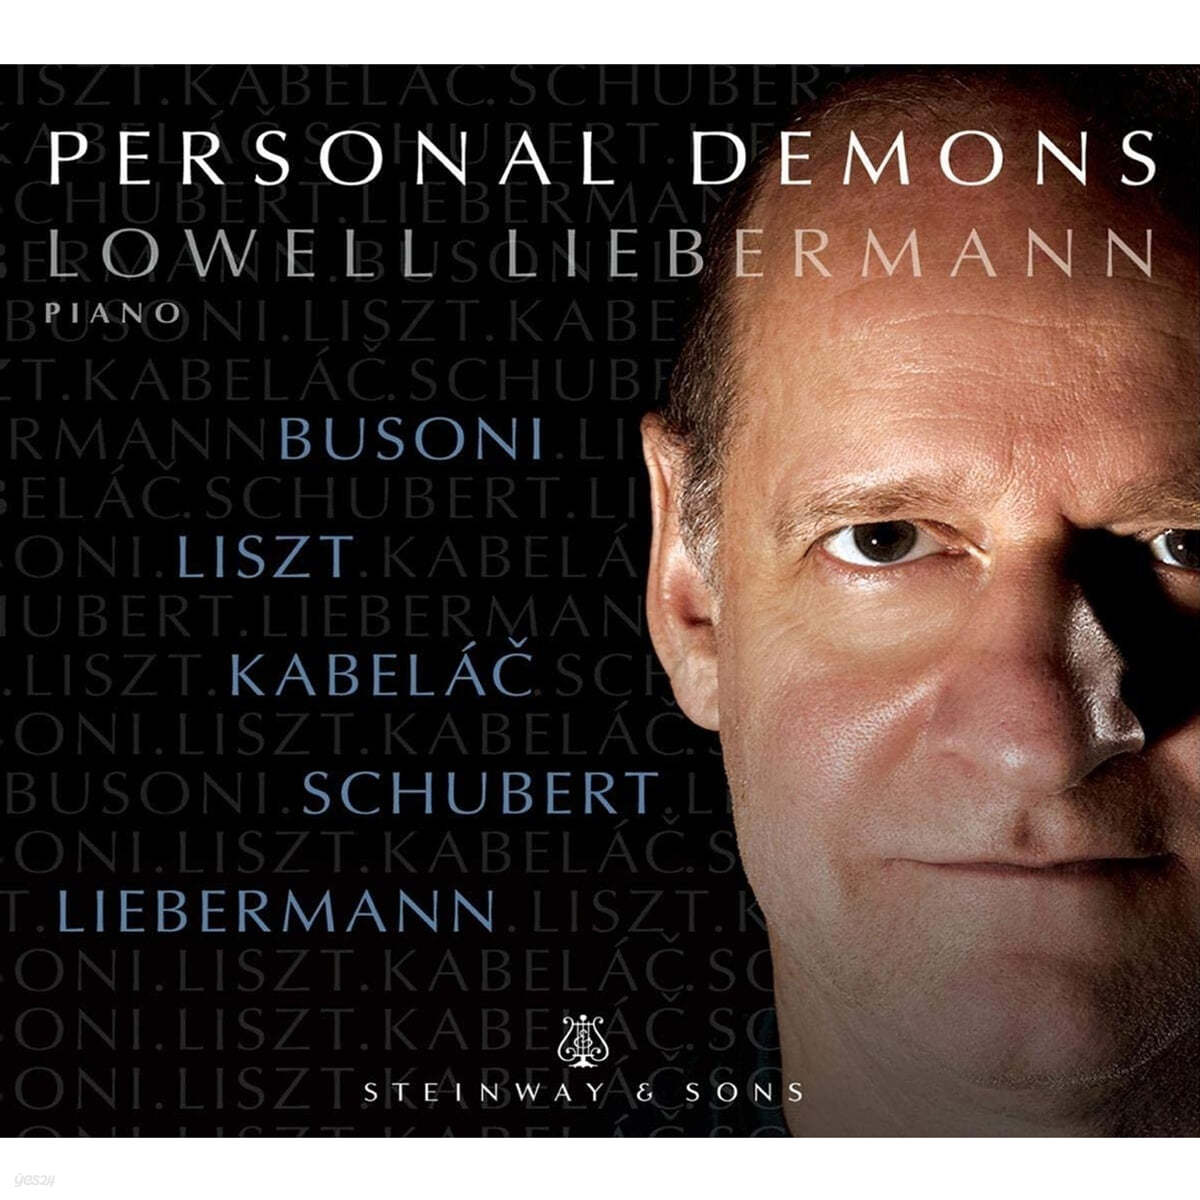 Lowell Liebermann 슈베르트: 휘텐브레너 변주곡 / 리스트: 죽음의 춤 (Schubert: 13 Variations on a theme by Anselm Huttenbrenner D576 / Liszt: Totentanz S.525) 